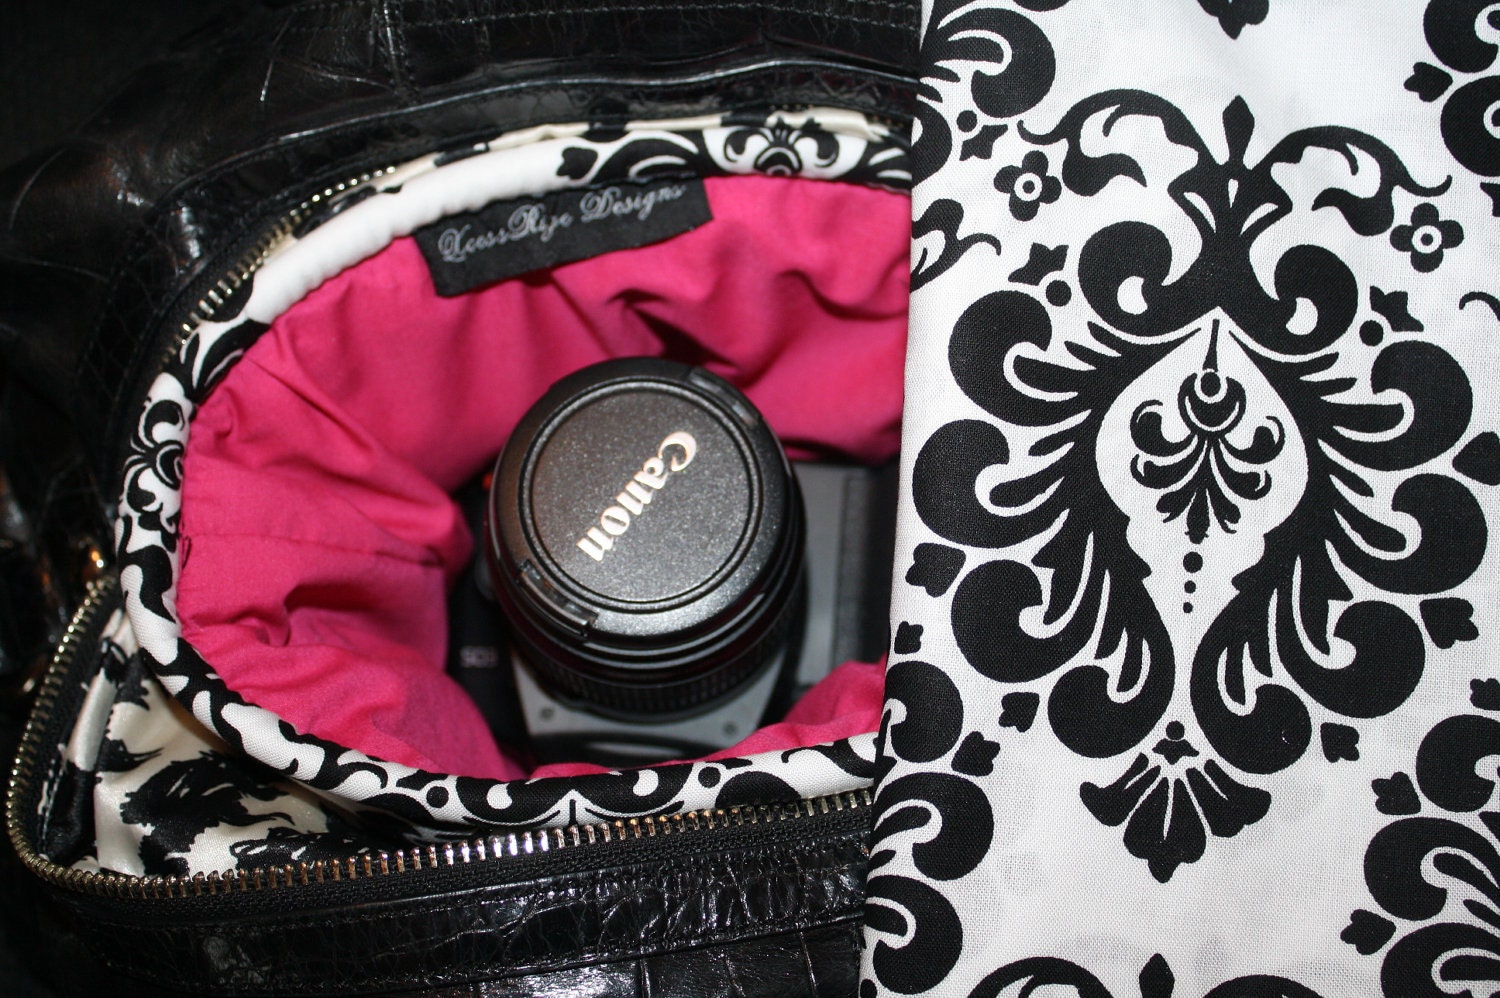 Digital Slr Camera Bag Dslr camera Bag insert Camera Coozy for purse damask pink Womens Small Size XcessRize Designs